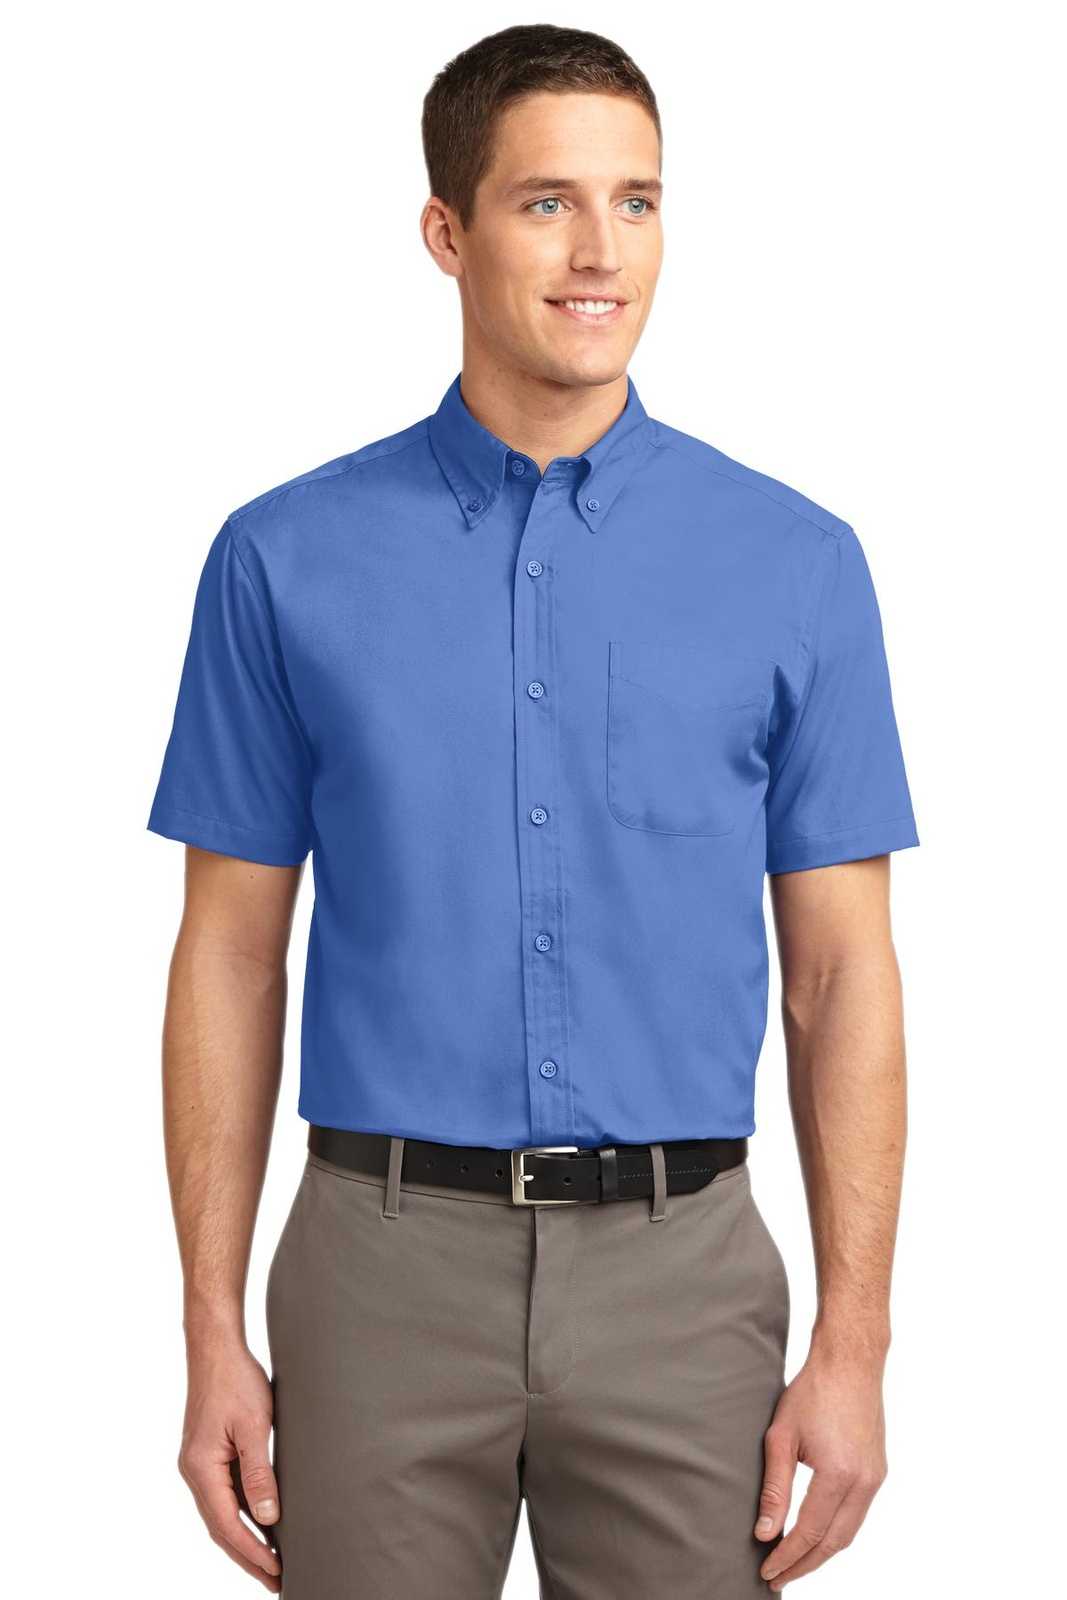 Port Authority TLS508 Tall Short Sleeve Easy Care Shirt - Ultramarine Blue - HIT a Double - 1